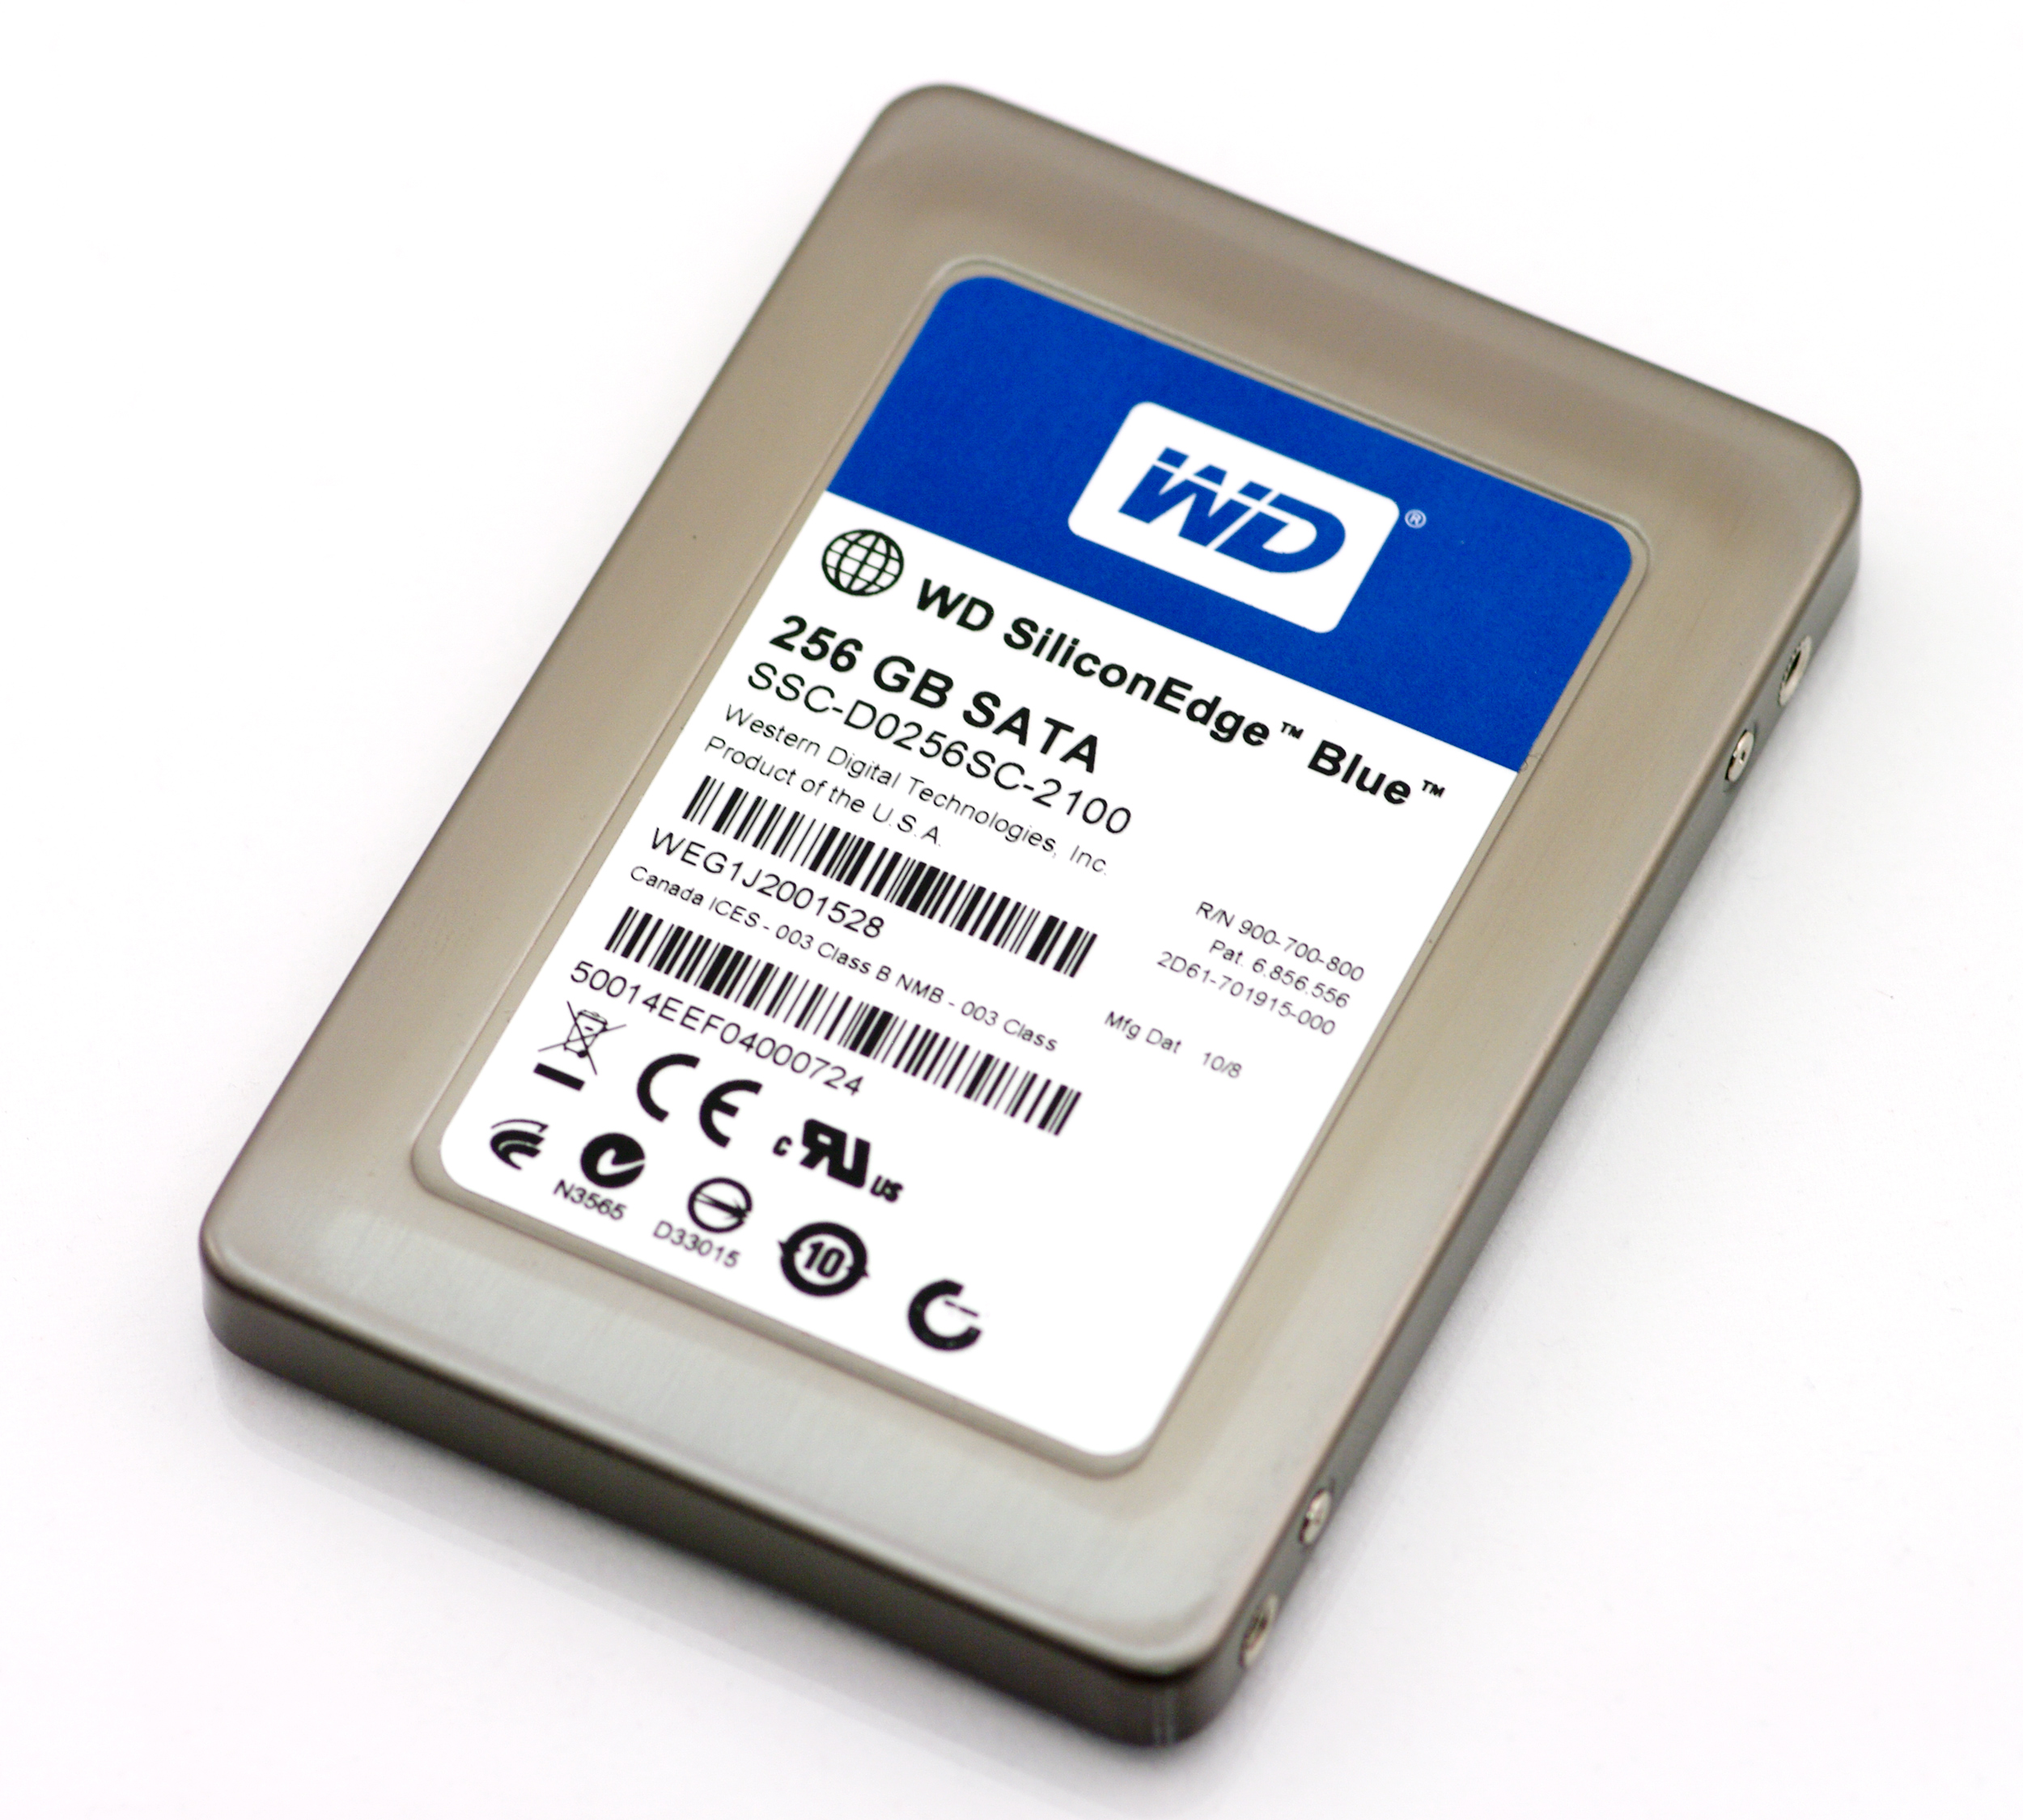 hver for sig mode svejsning Western Digital SiliconEdge Blue SSD Review - StorageReview.com